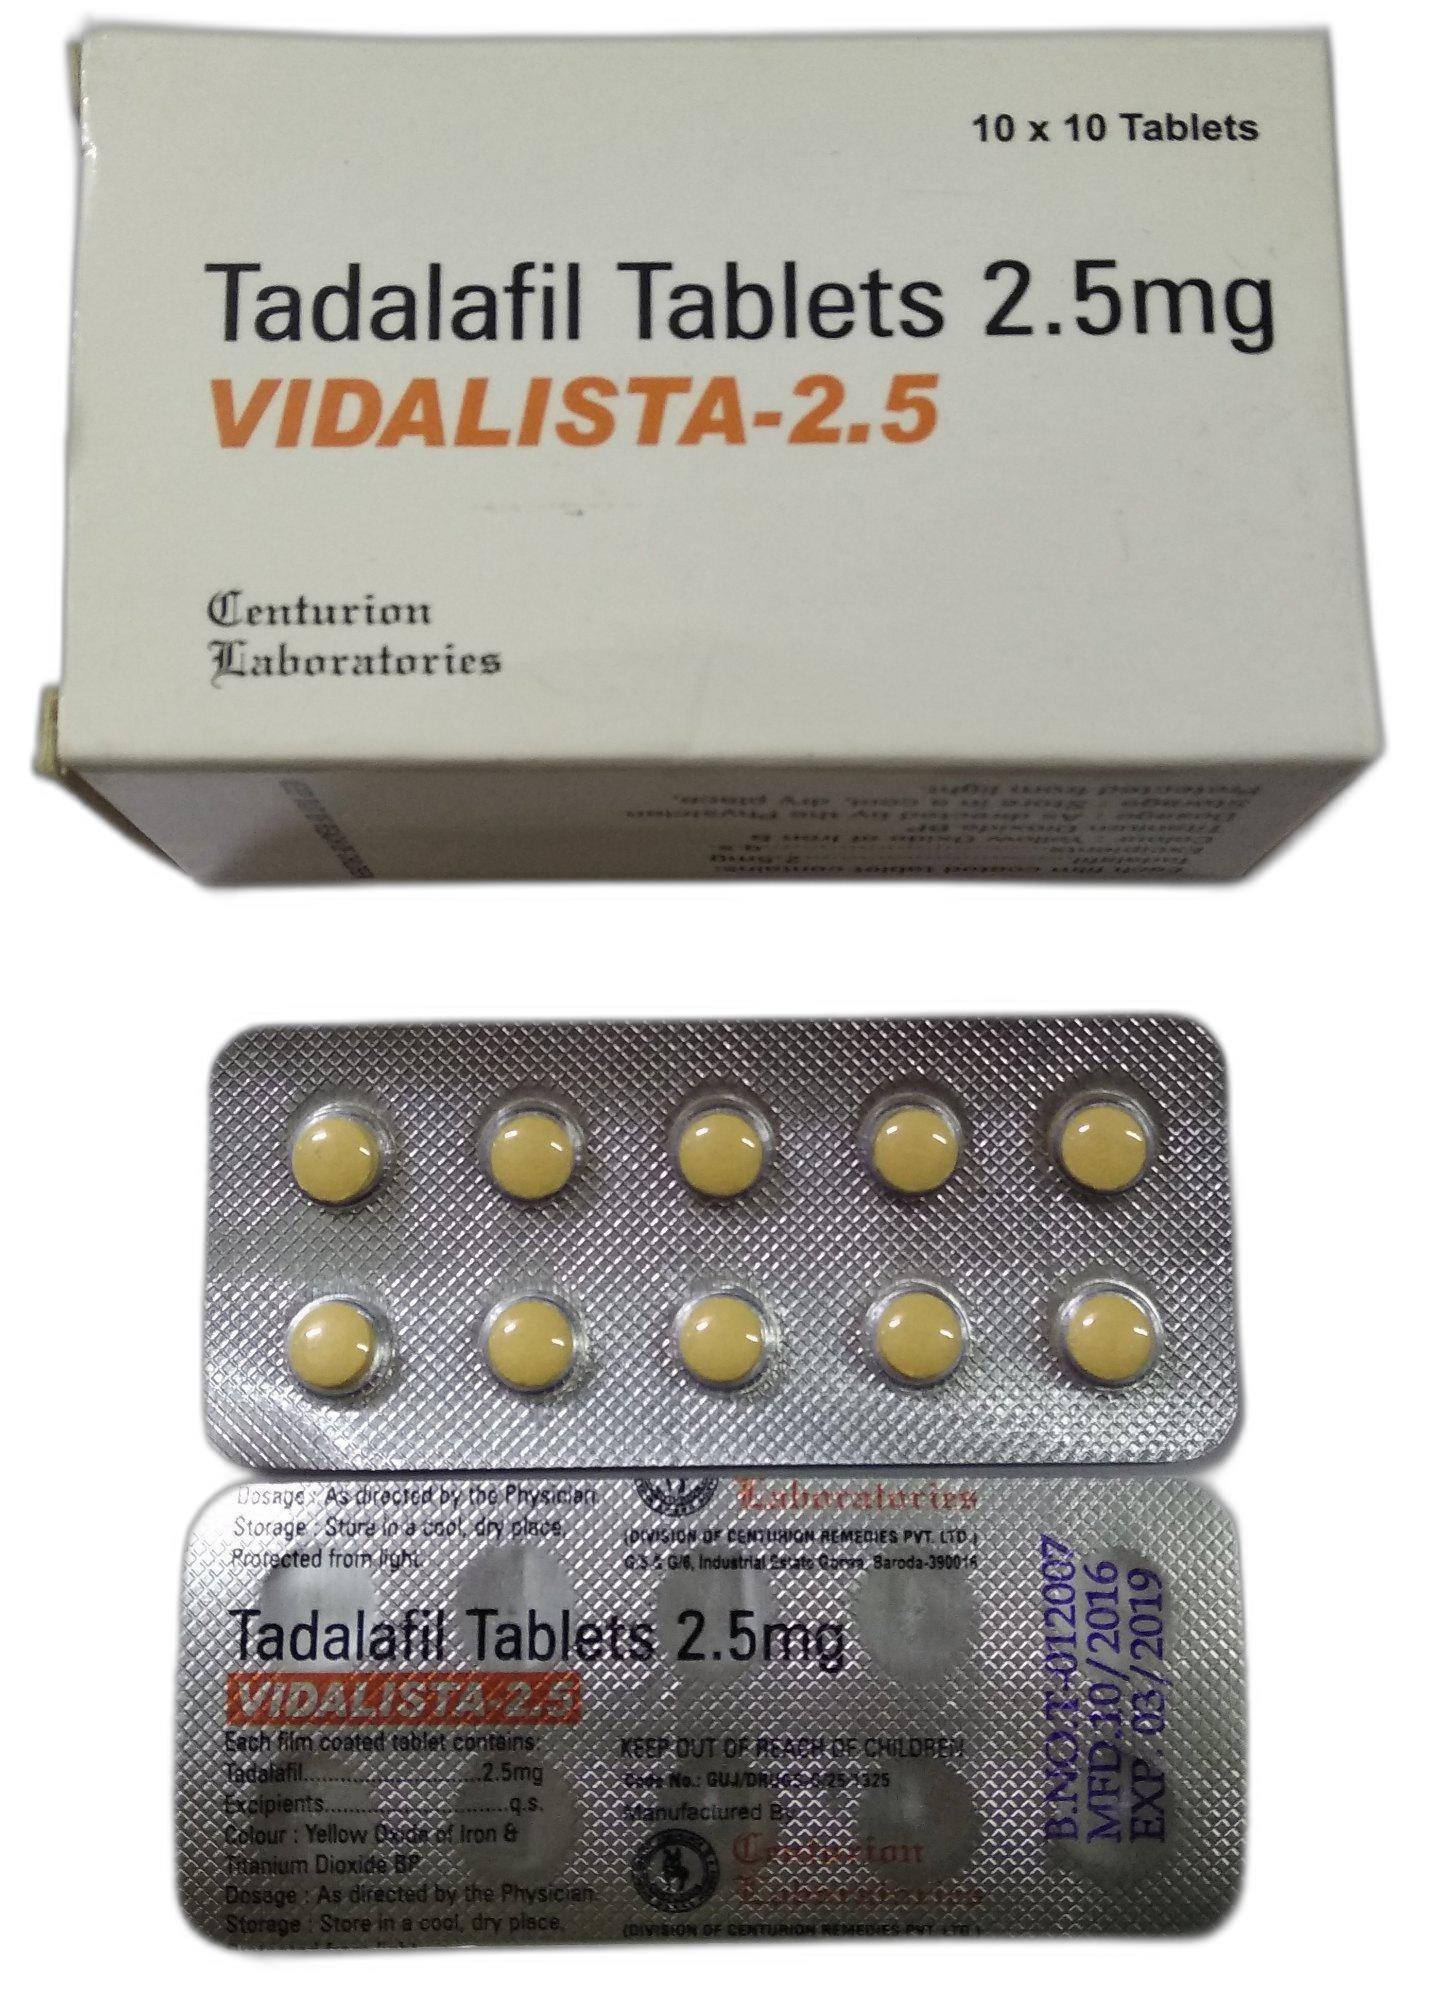 vidalista-2-5-mg